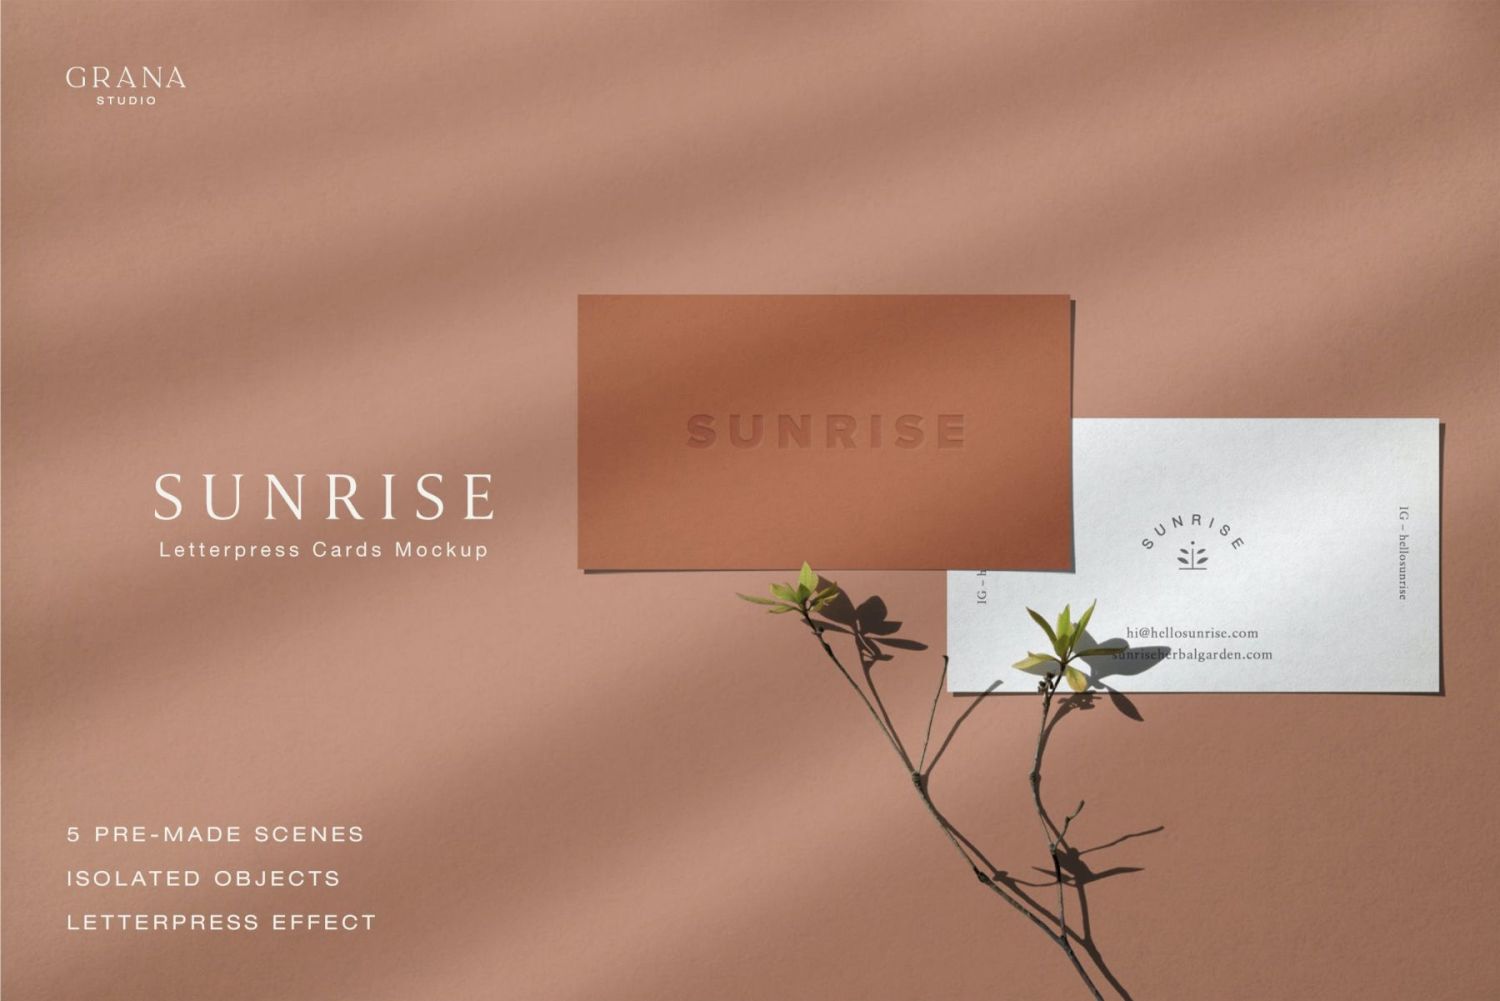 日出凸版名片样机 SUNRISE Letterpress Business Cards Mockup插图